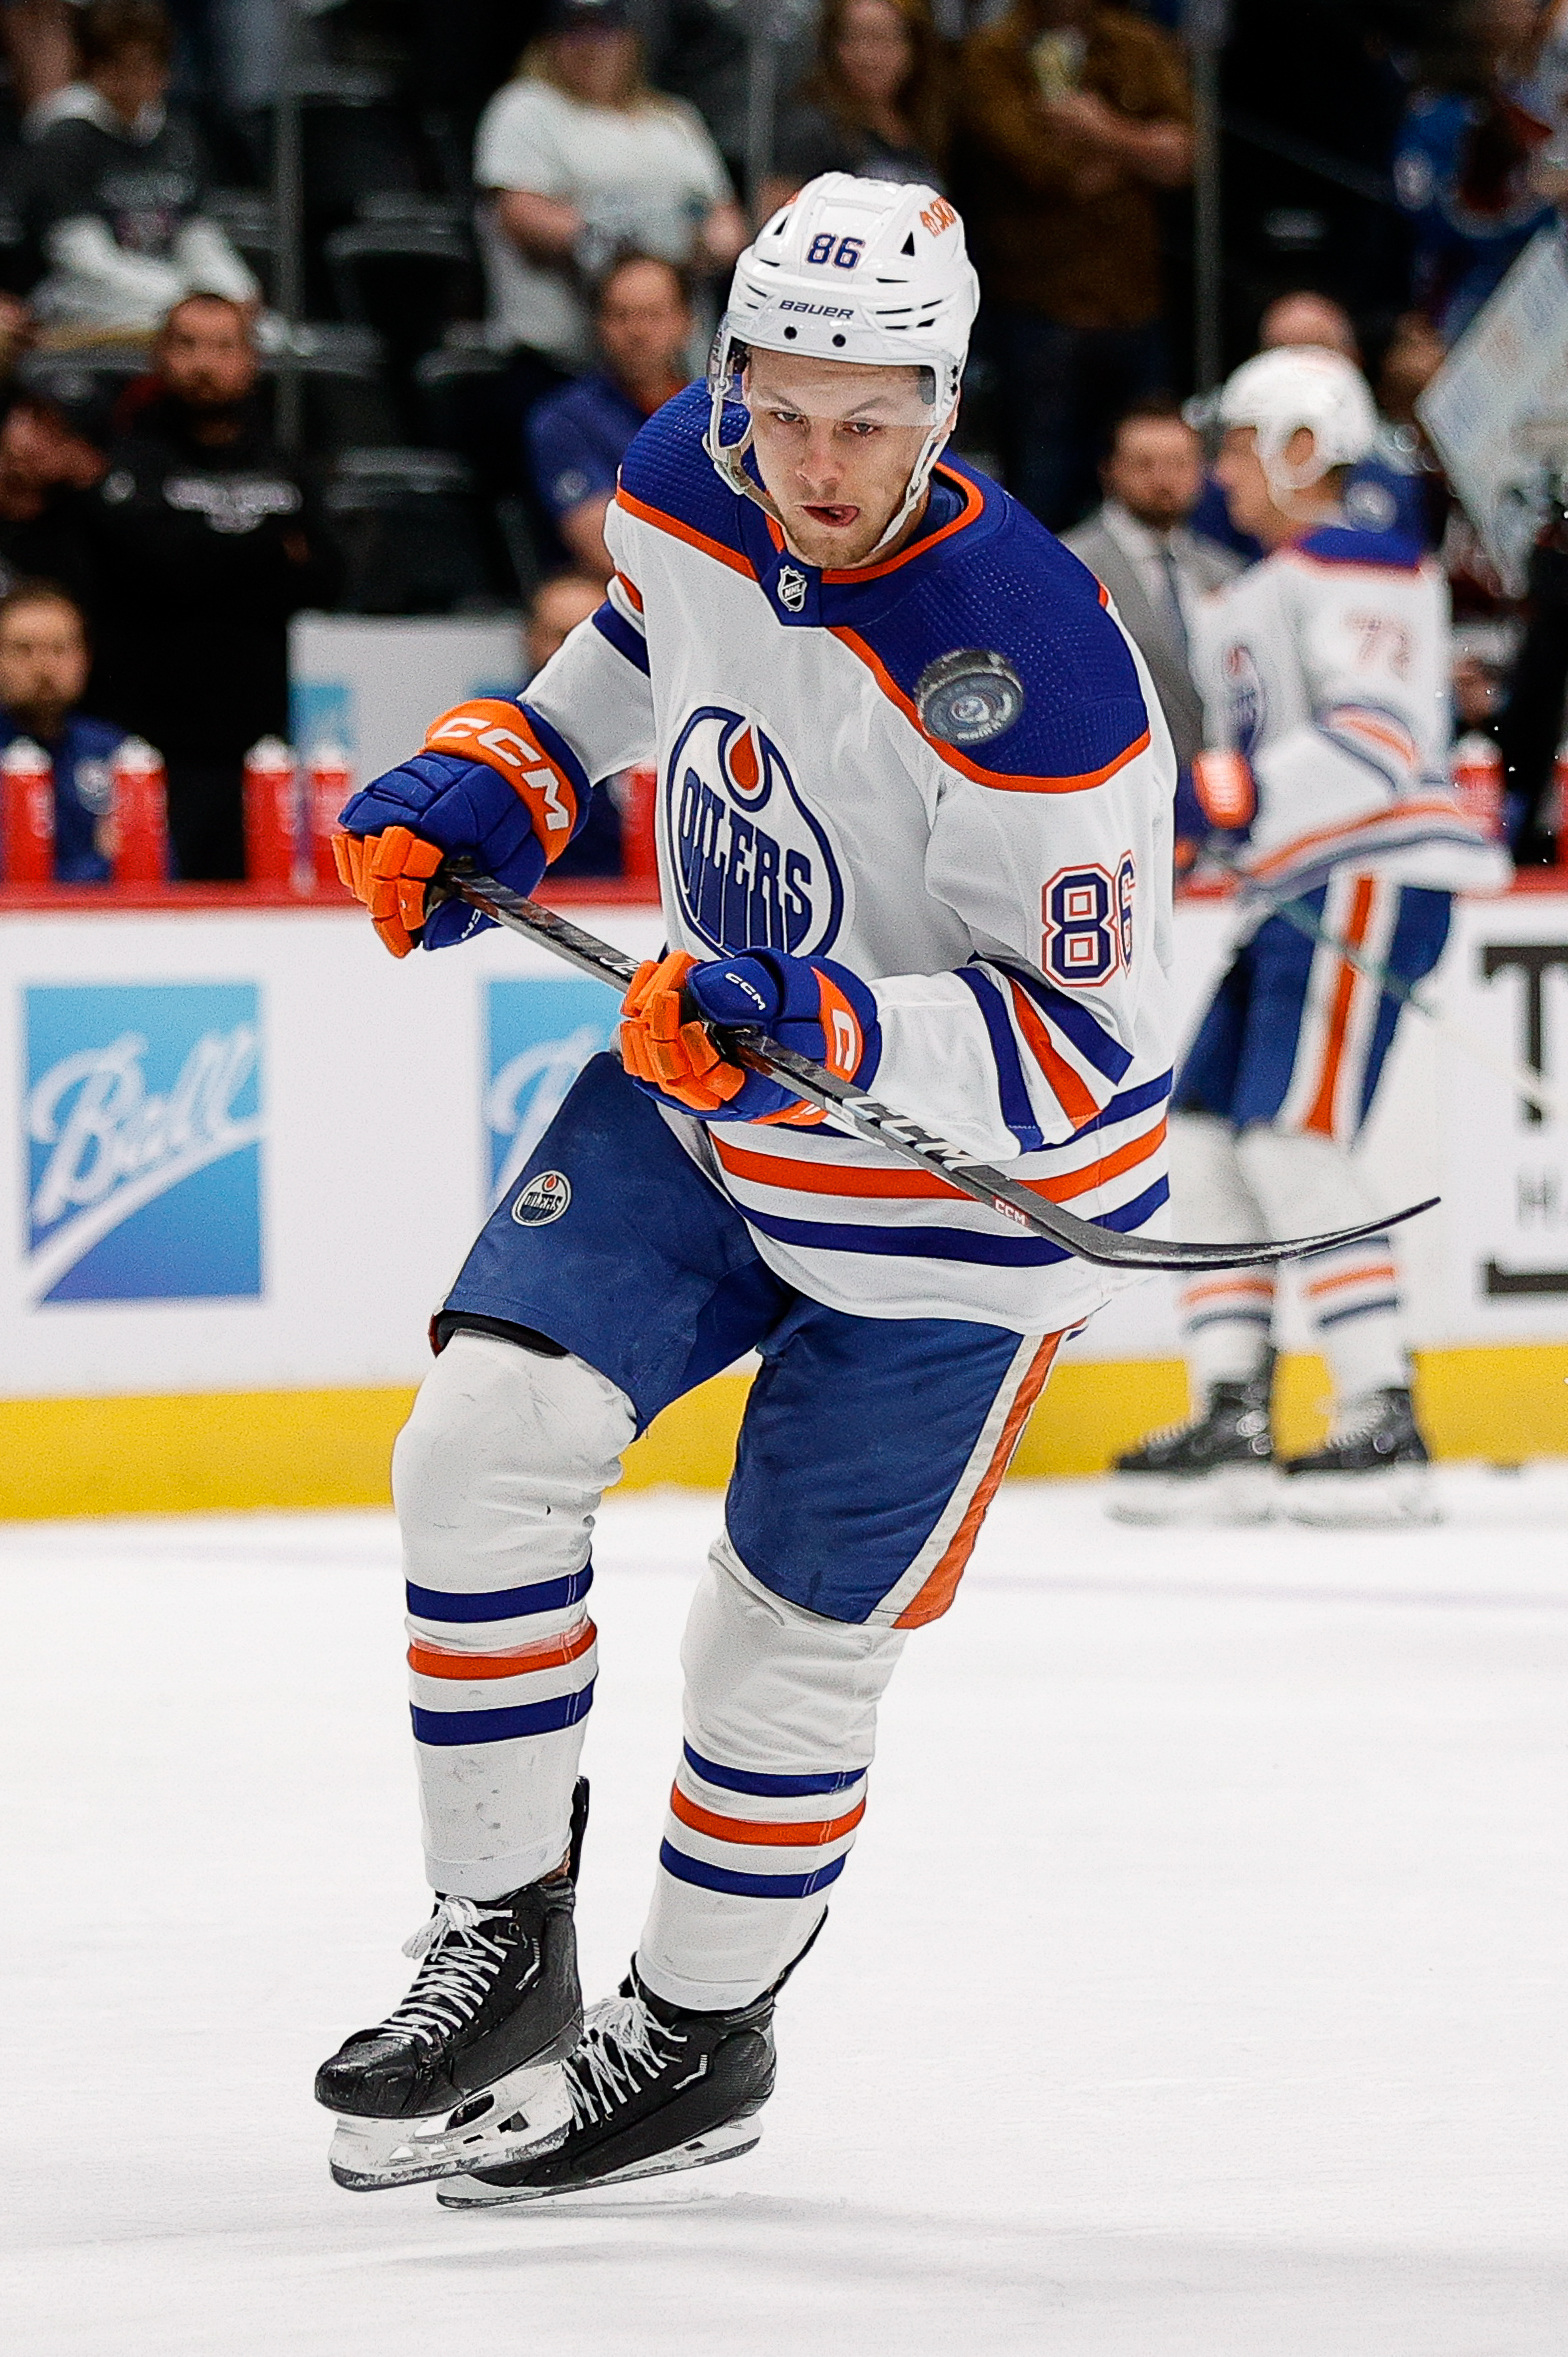 NHL - Showdown between Edmonton Oilers captain Connor McDavid and